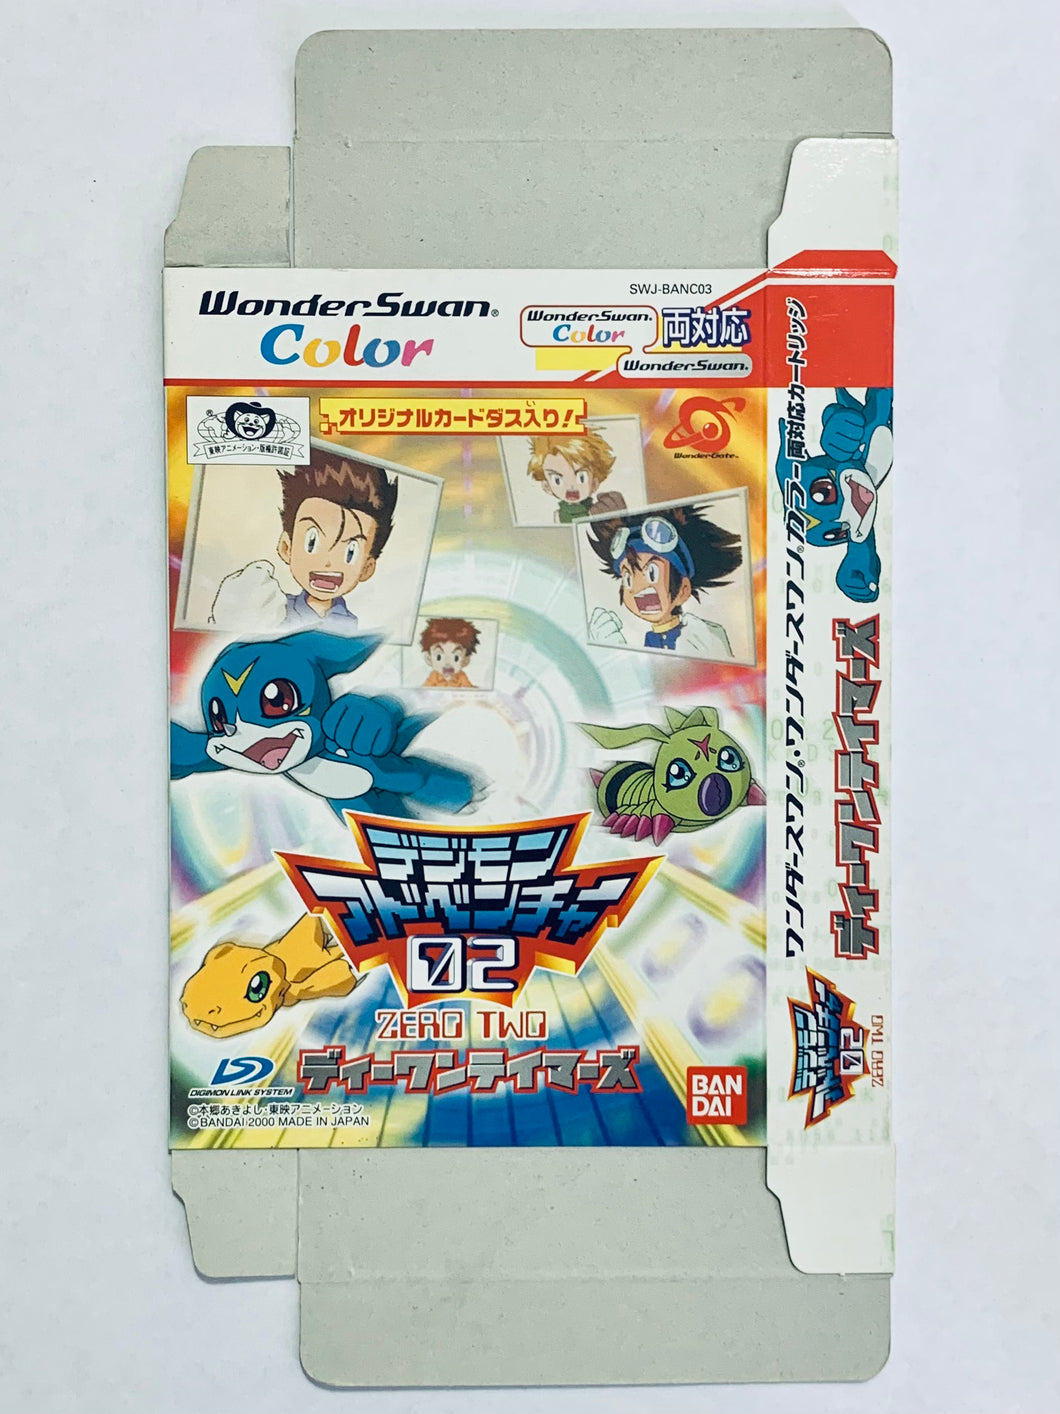 Digimon Adventure 02: D1 Tamers - WonderSwan Color - WSC - JP - Box Only (SWJ-BANC03)